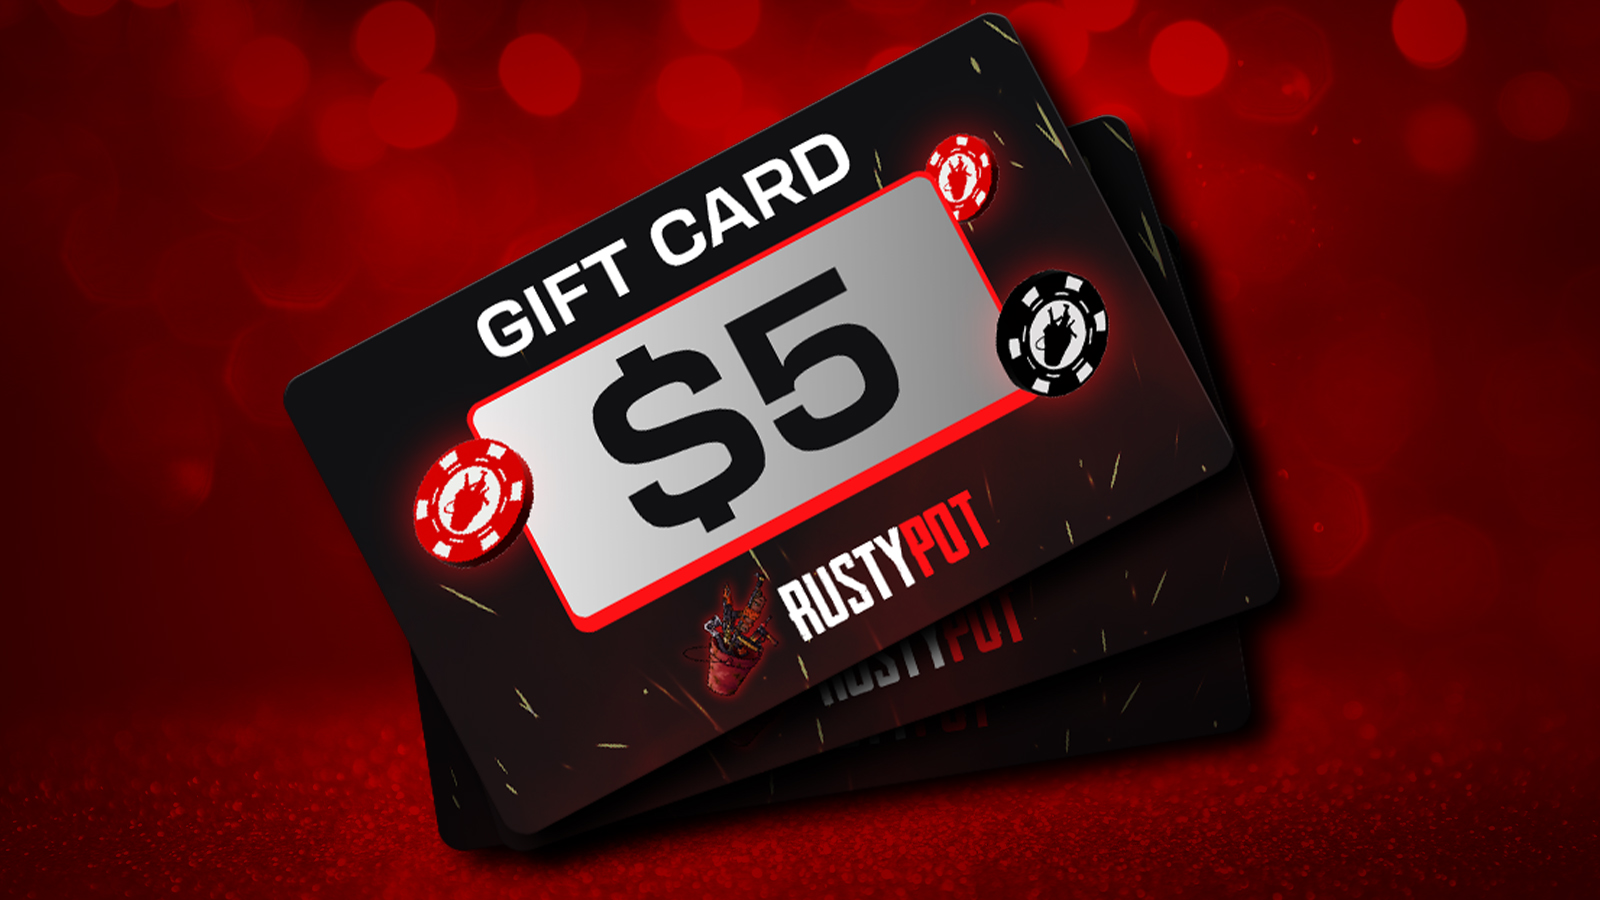 RustyPot $5 Grub Bucks Giftcard, $5.25